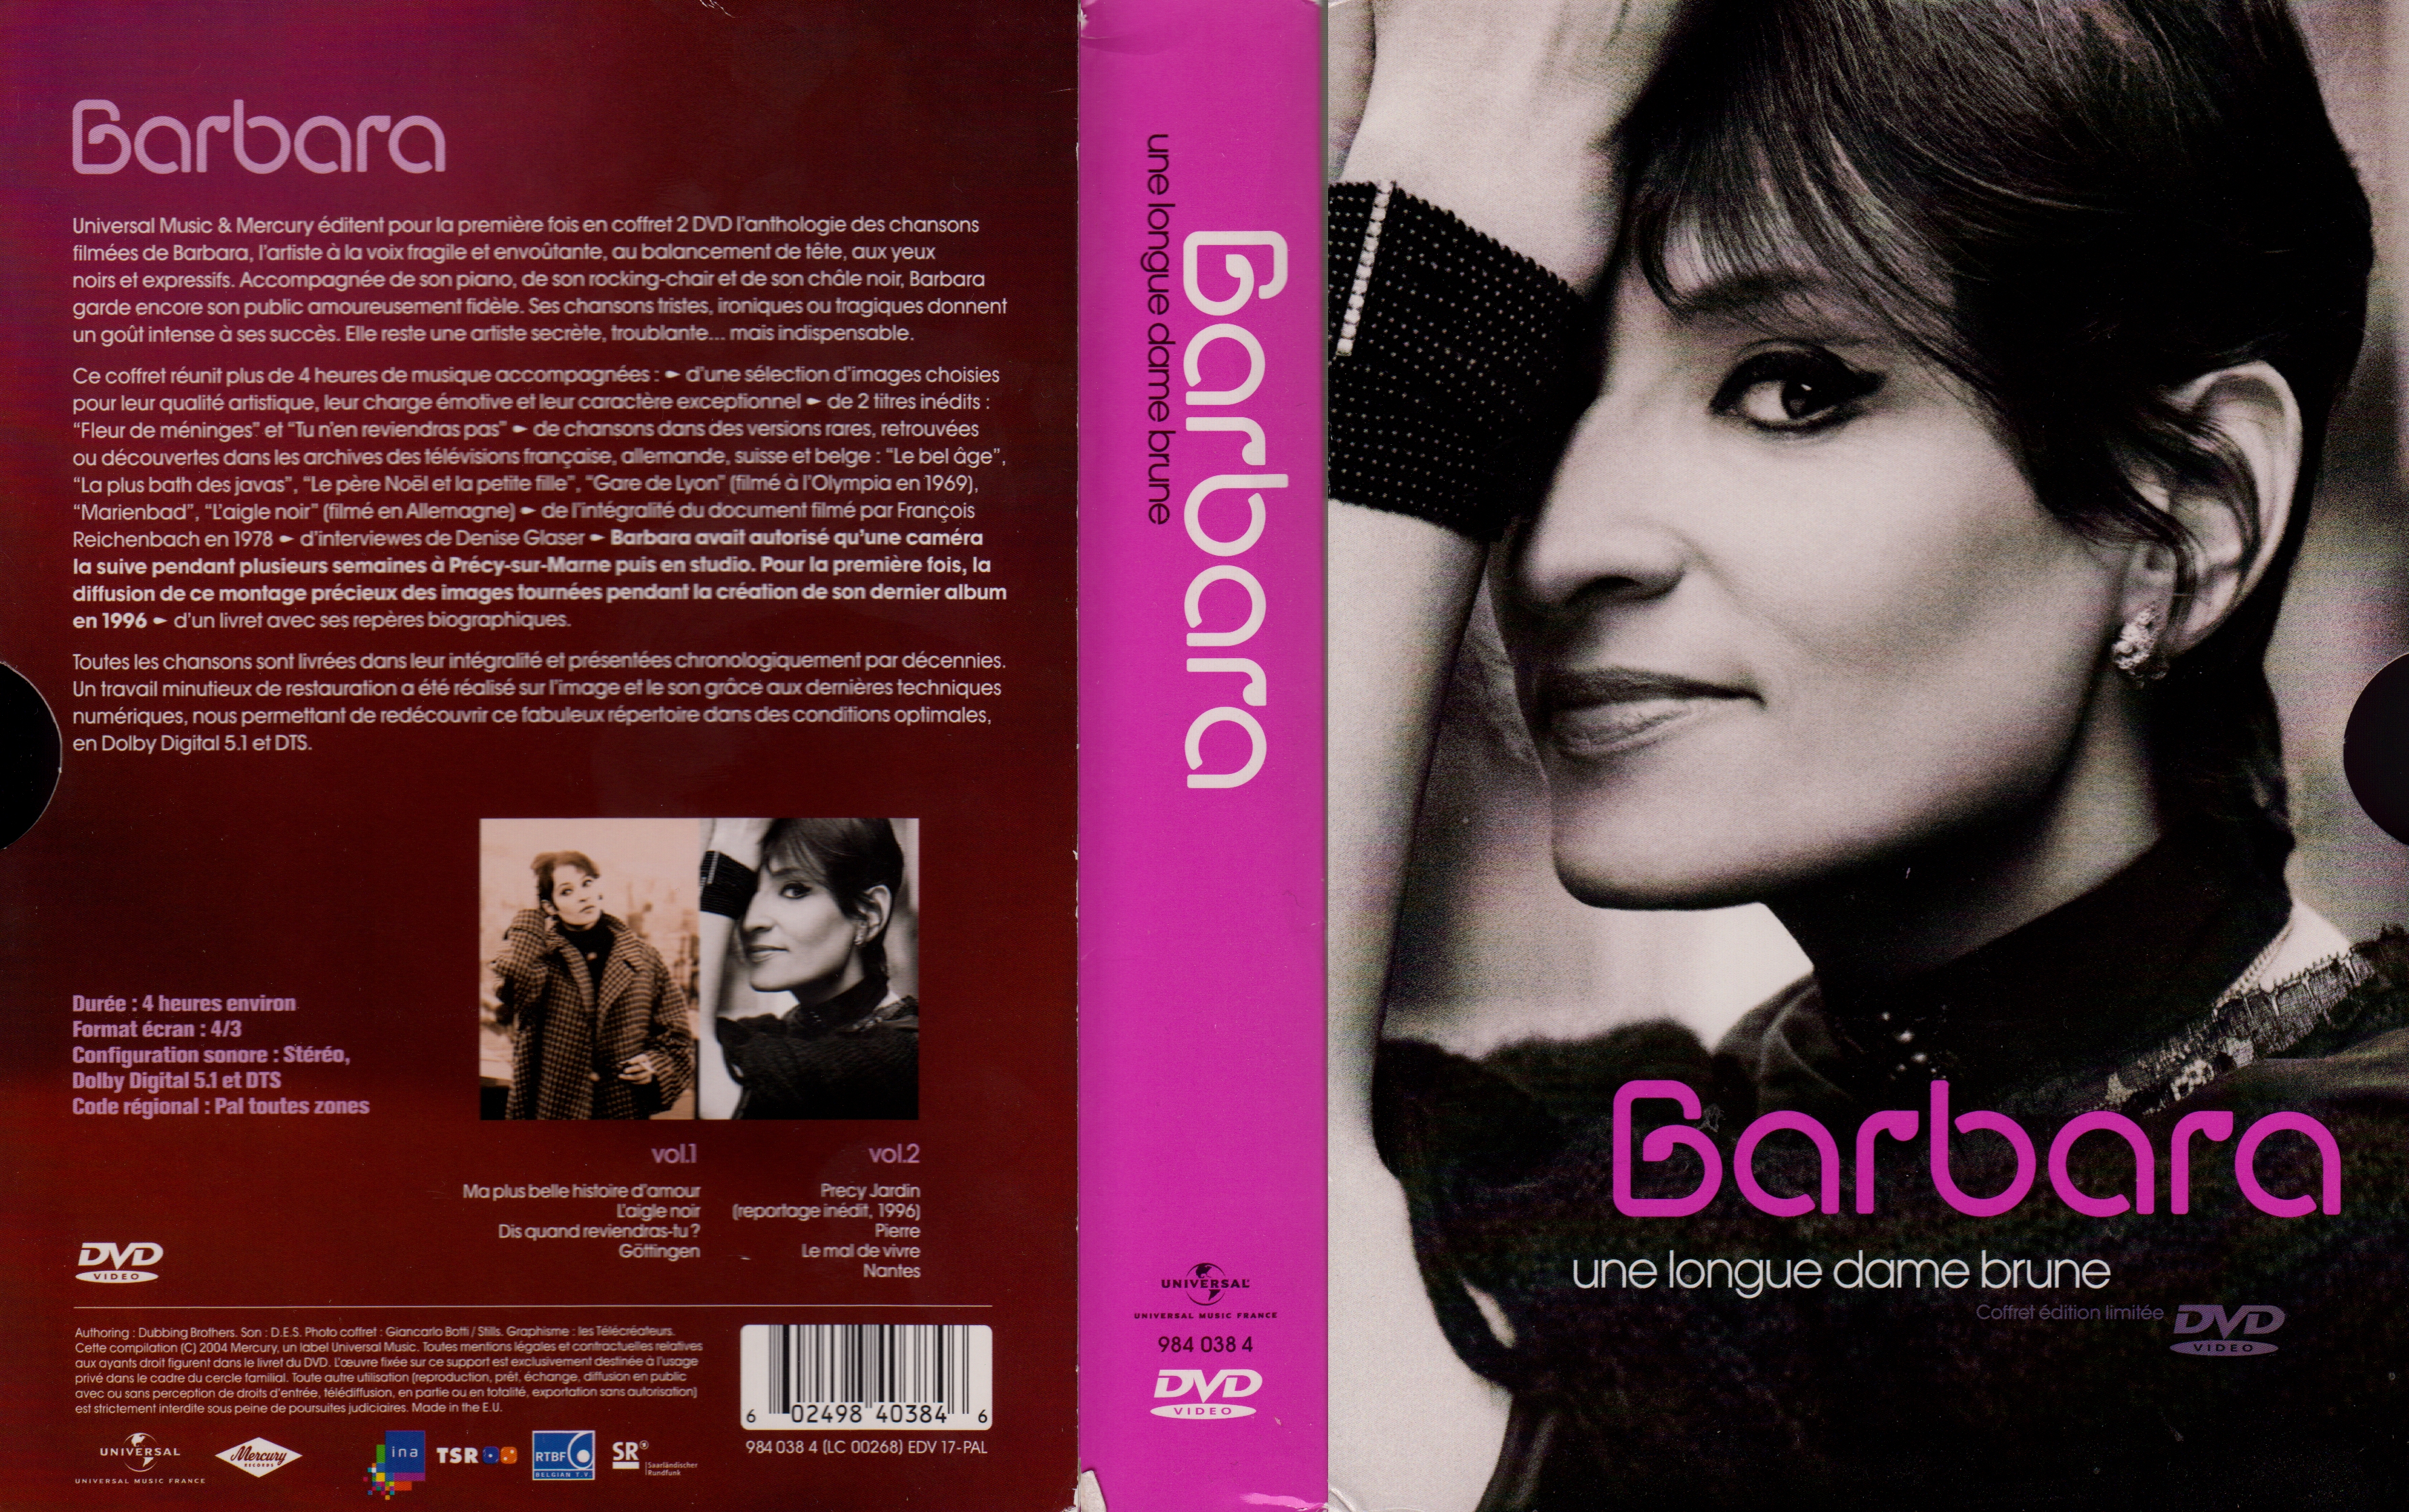 Jaquette DVD Barbara Une longue Dame brune